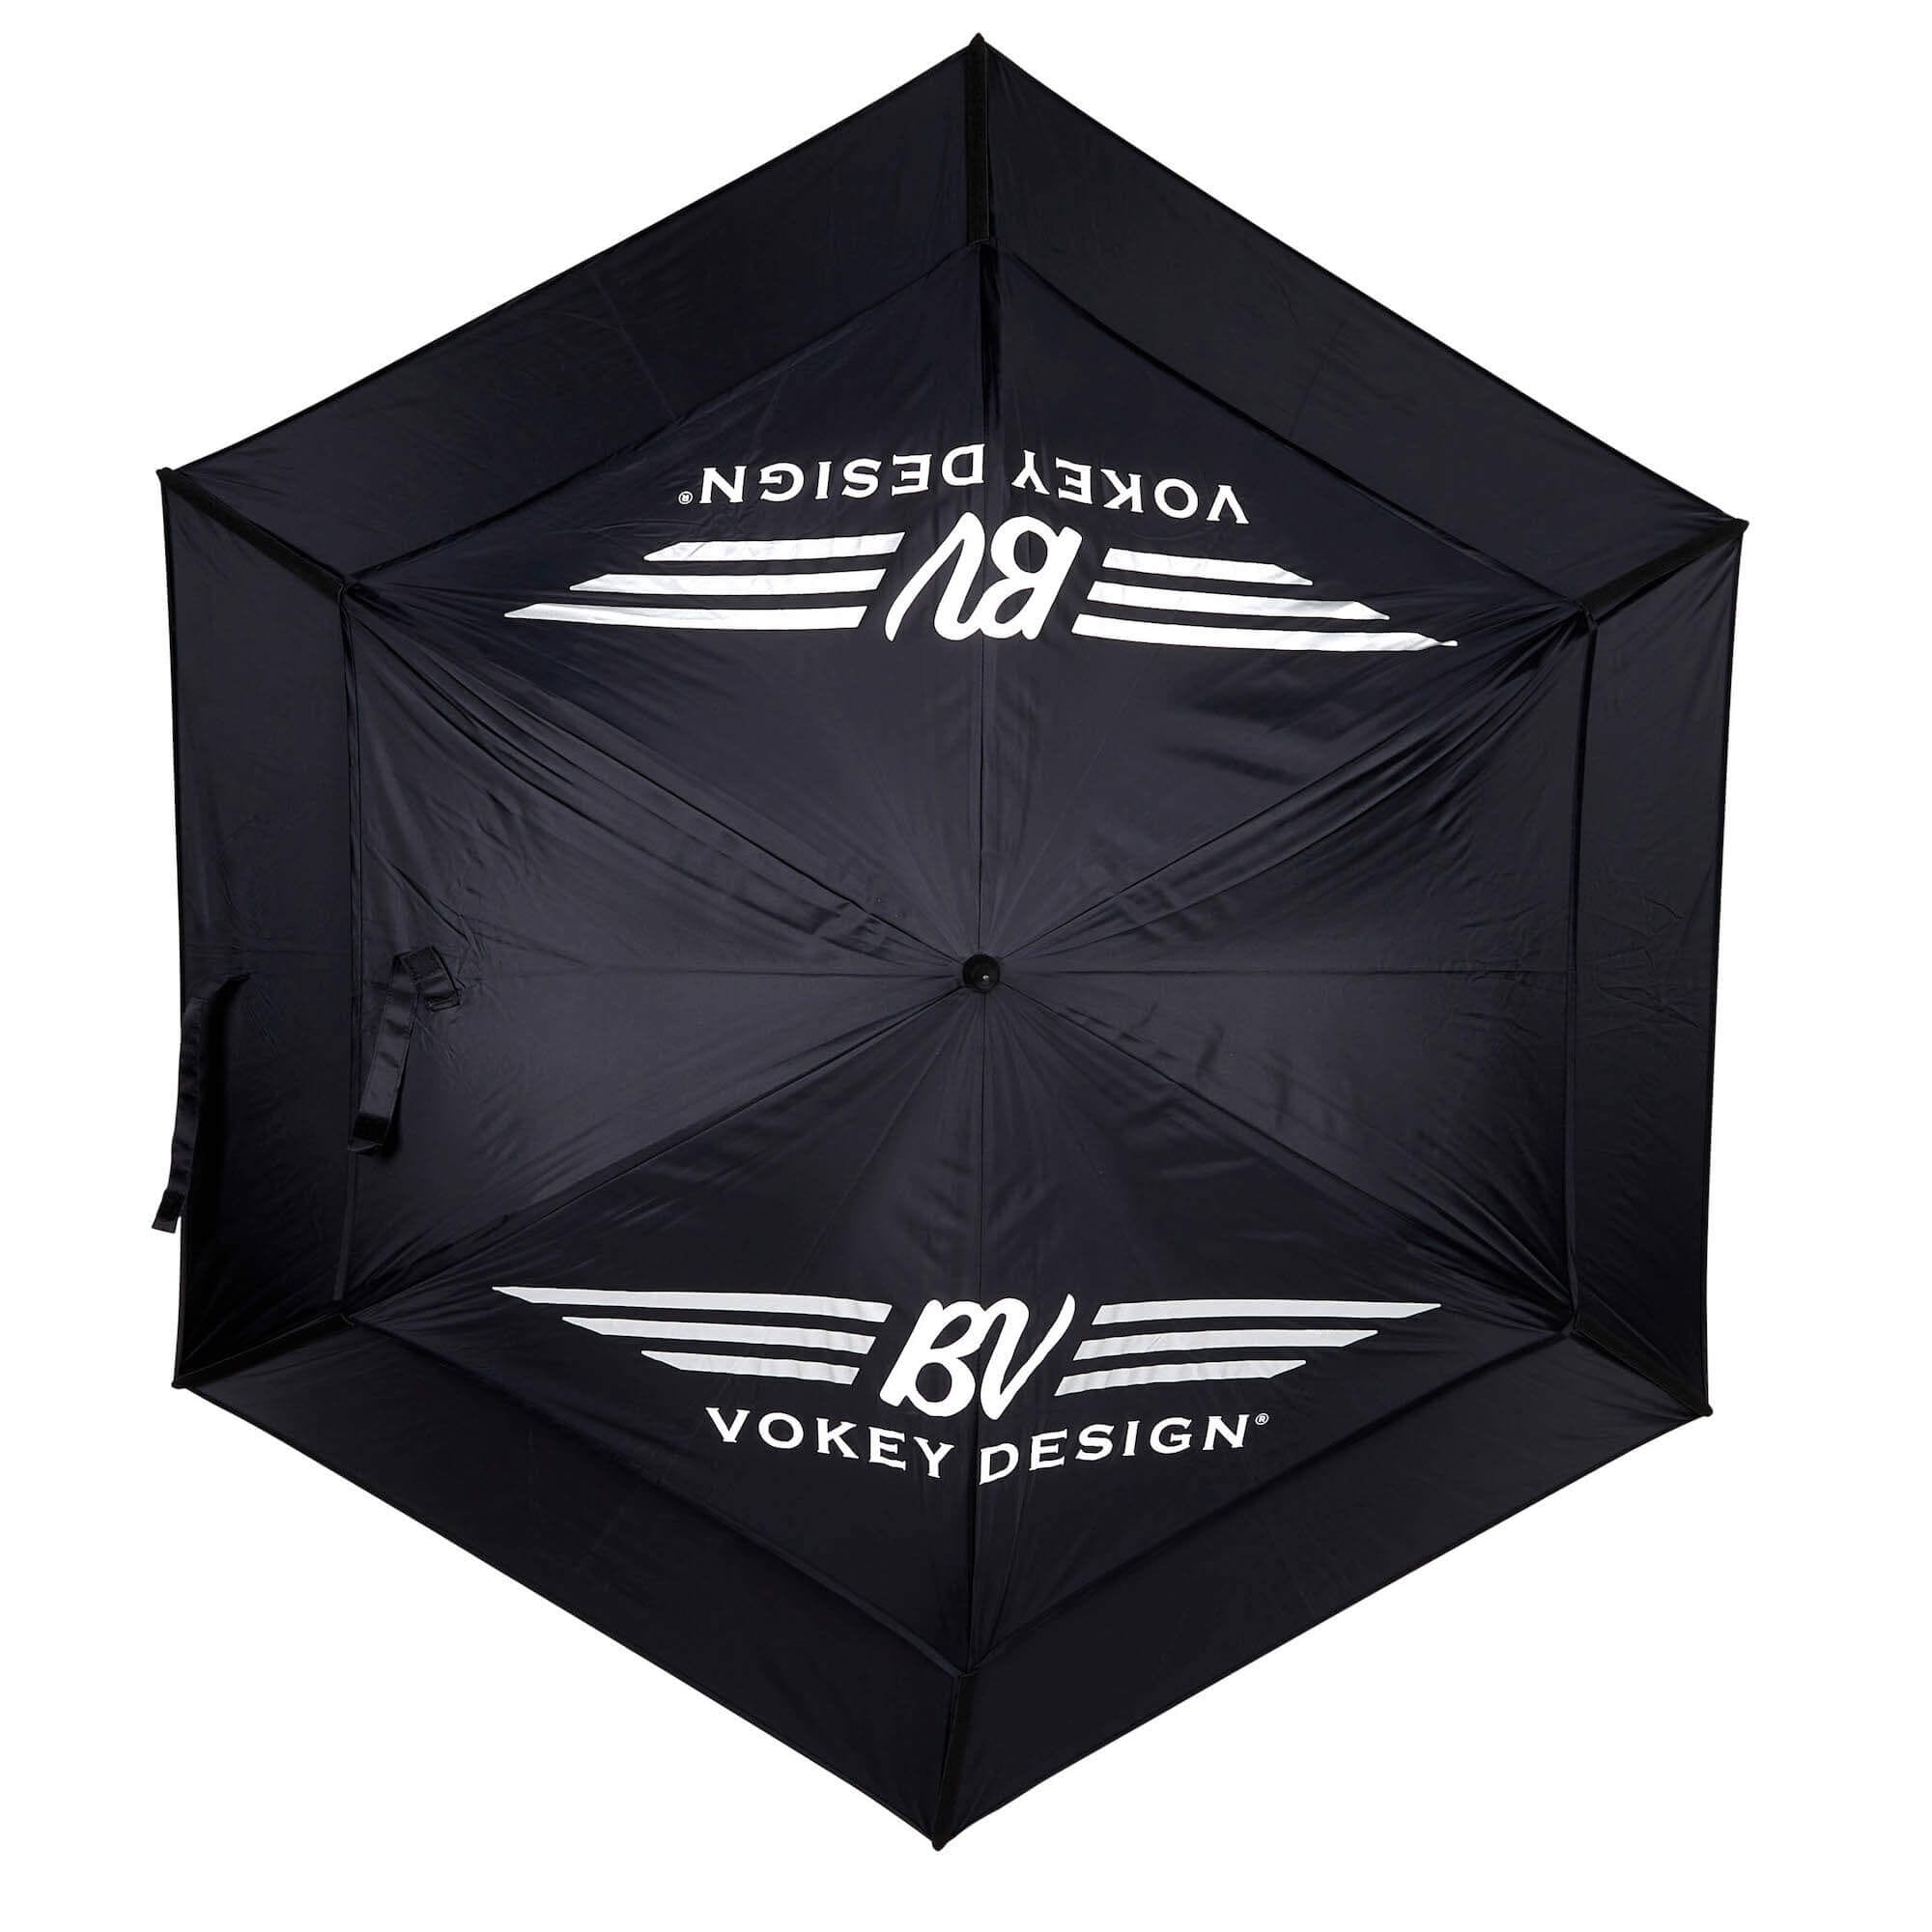 Vokey Tour Double Canopy Umbrella - Black + White/Silver